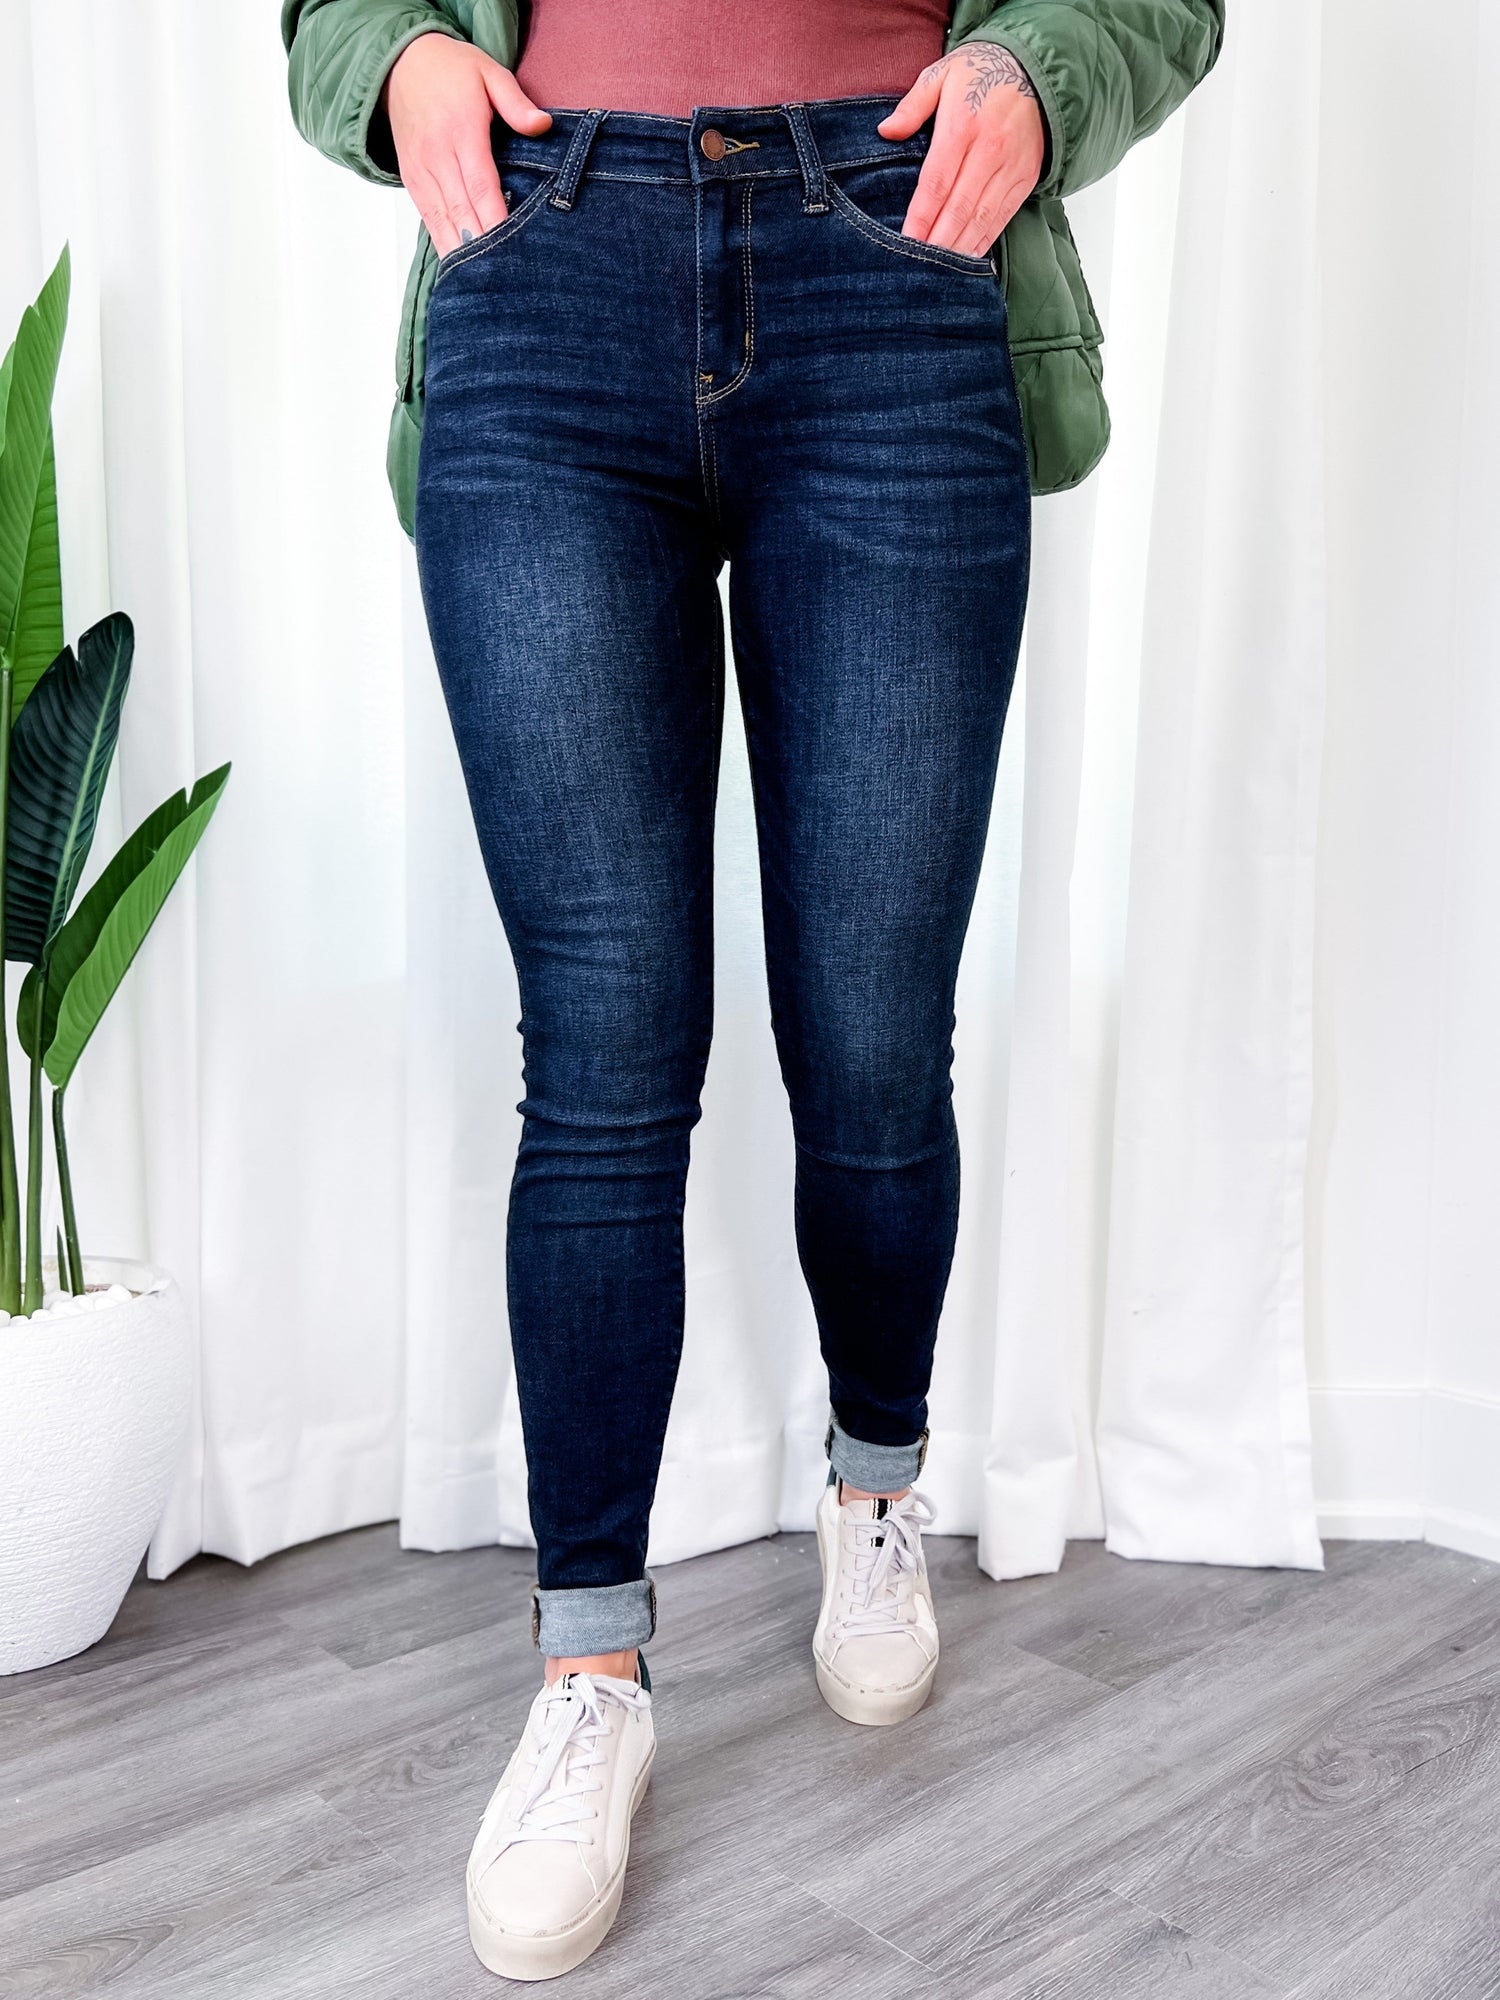 PLUS/REG Judy Blue Long Tall Sally Non-Distressed Skinny Jeans (34" INSEAM!) 82152 DK